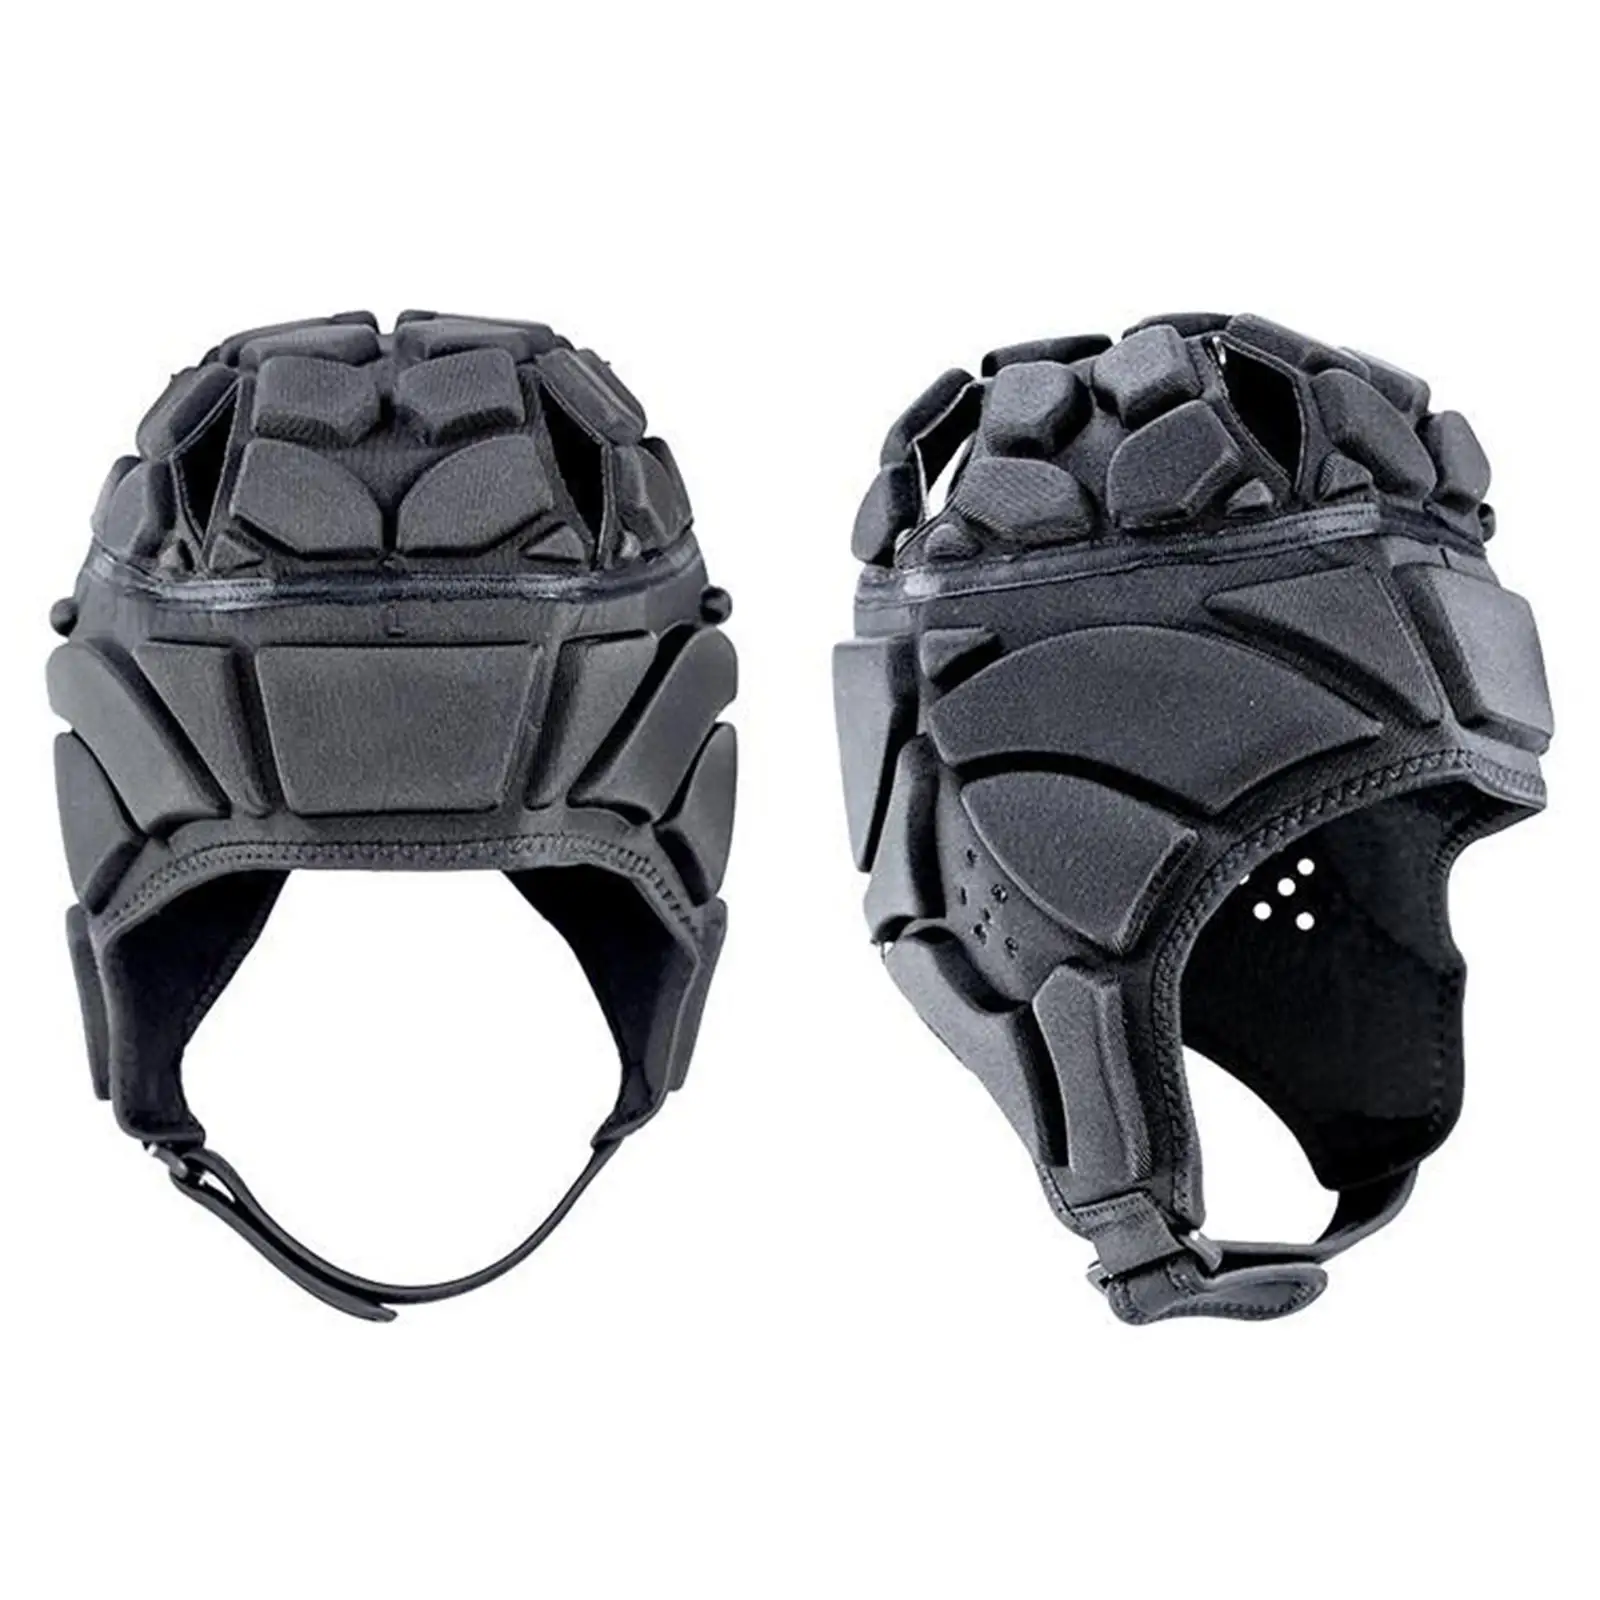 Adjustable EVA Padded Rugby Helmet Baseball Skateboard Padded Hat Cap Adults Kids Youth Head Protector for Ice Hockey Soccer